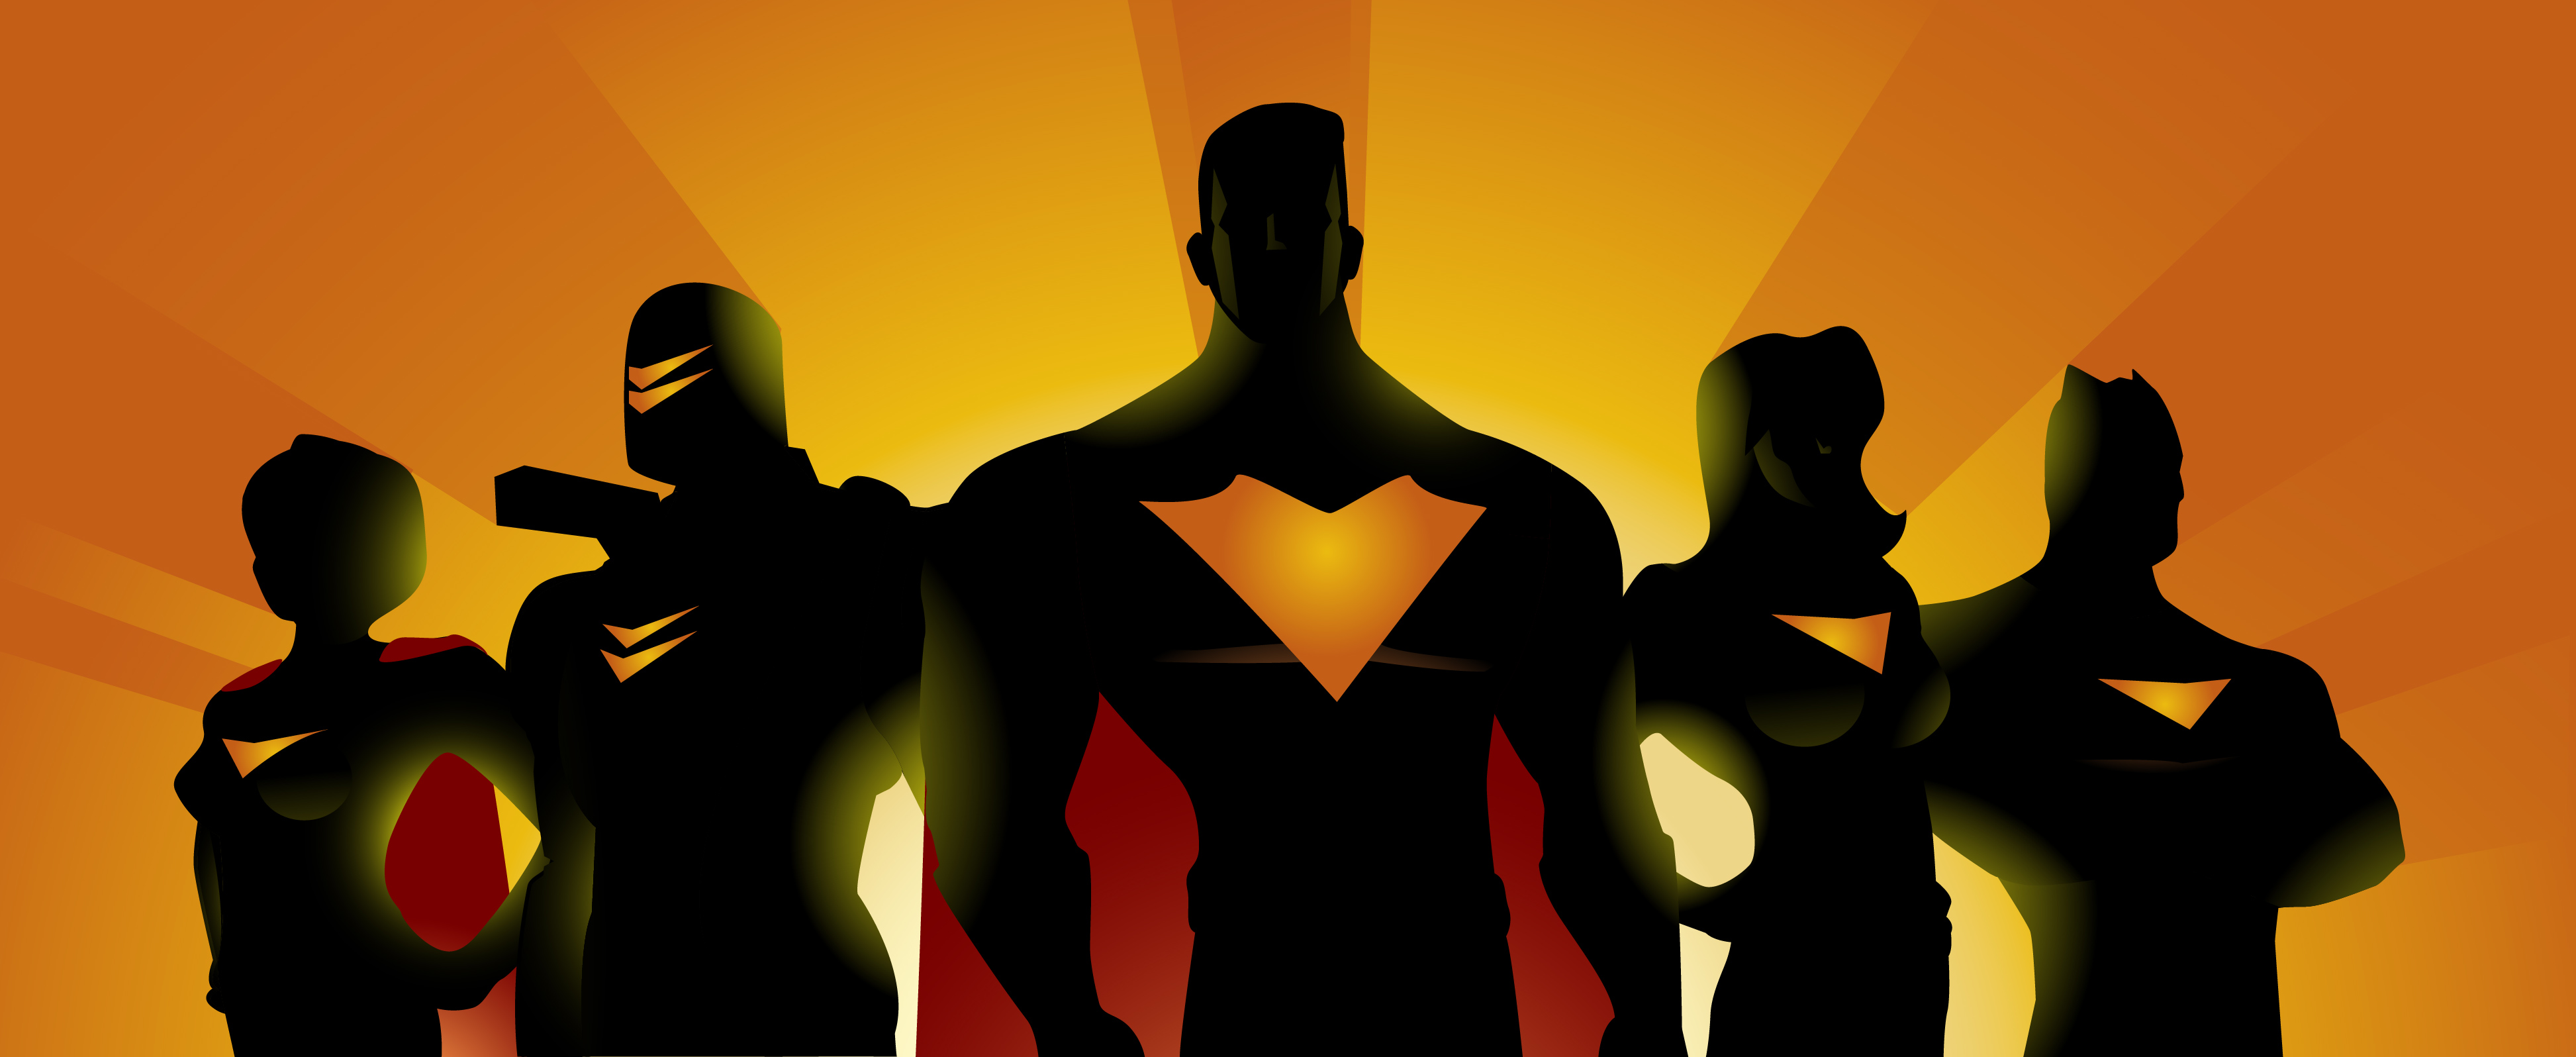 silhouettes of Superman, Batman and Wonderwoman